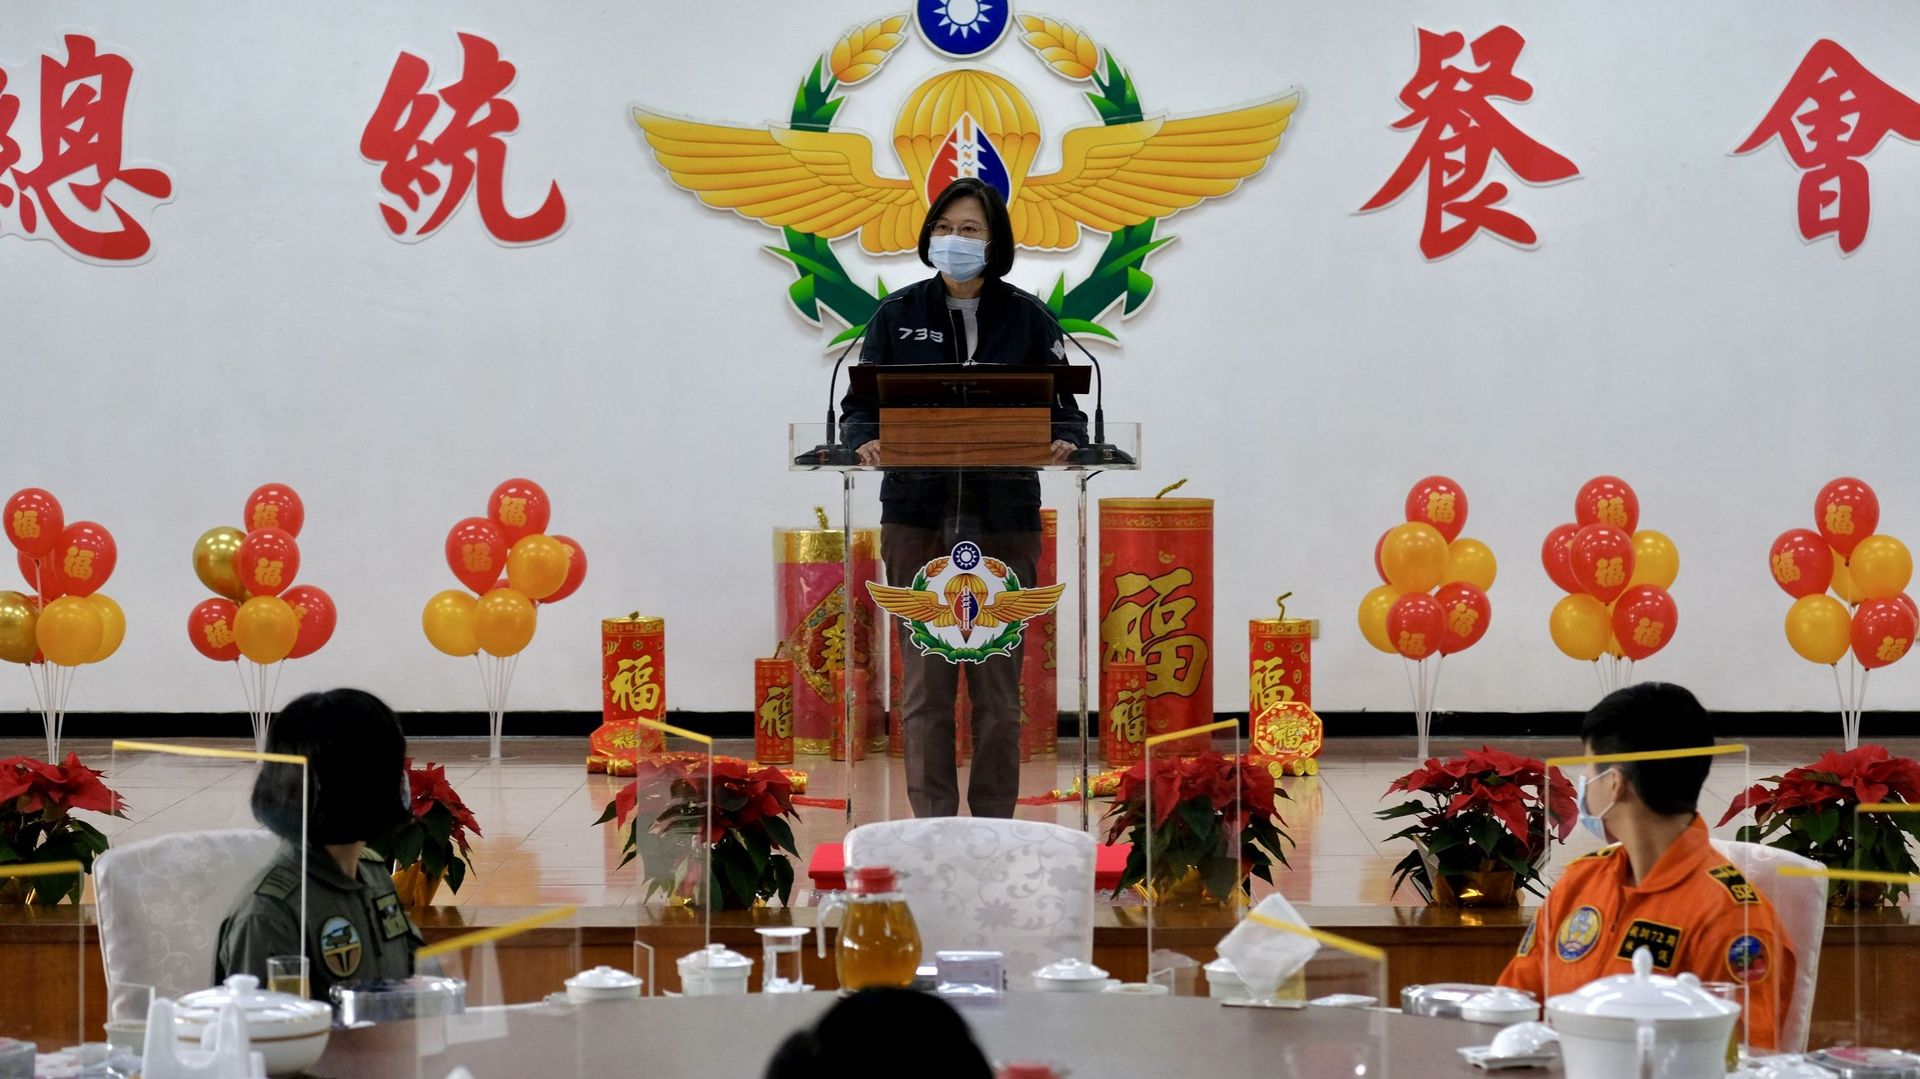 La présidente Tsai Ing-wen passe ses troupes en revue